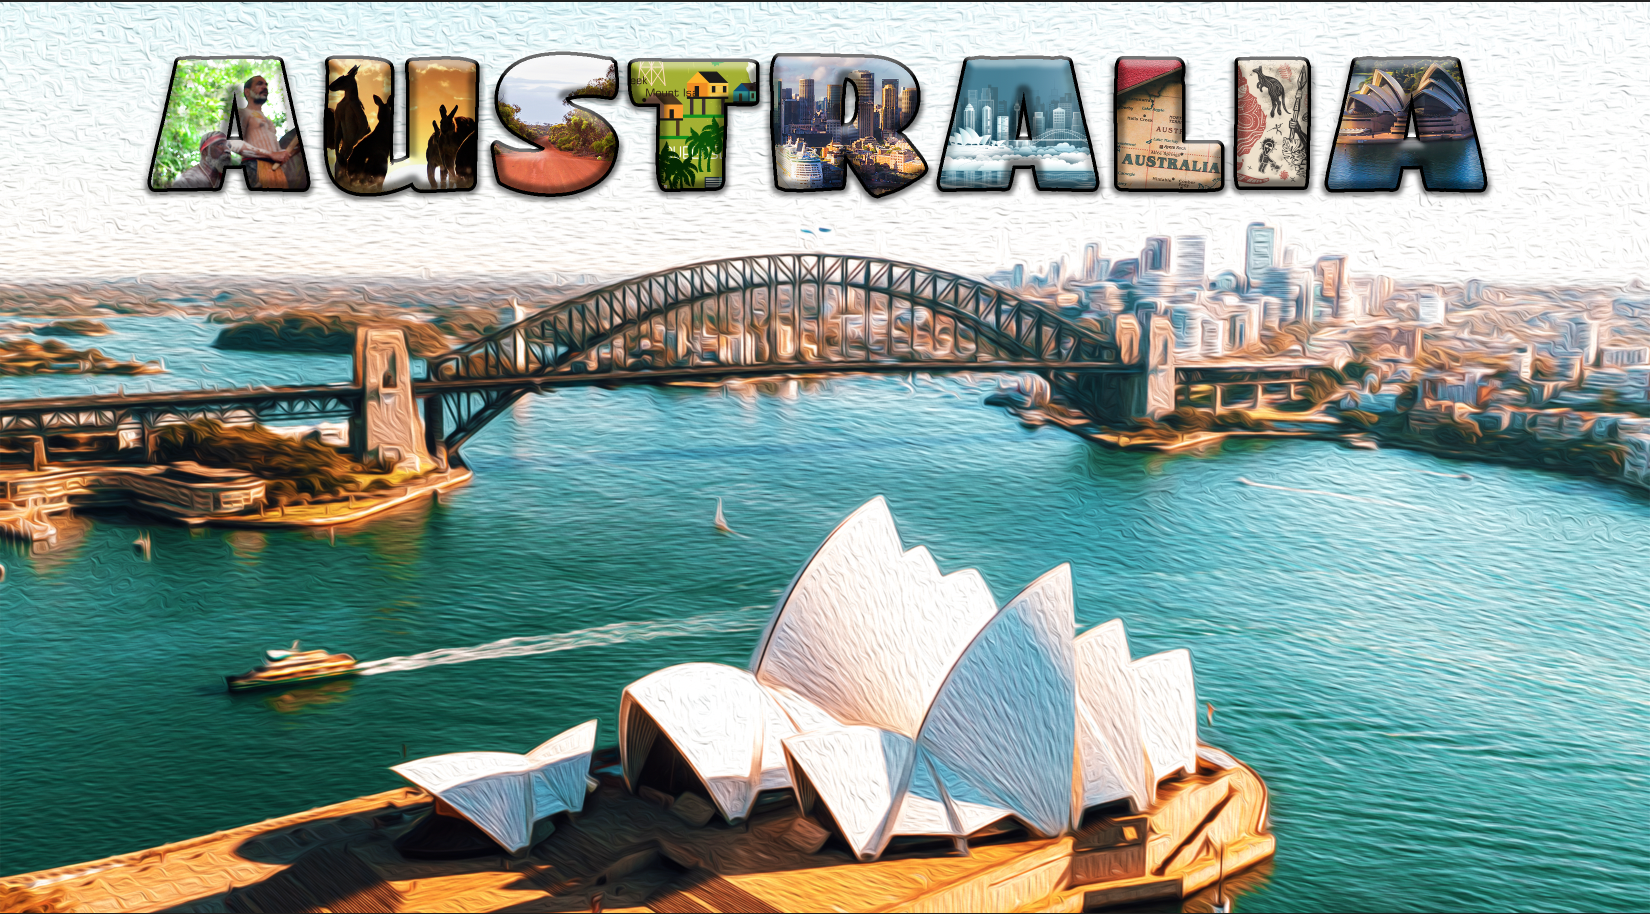 Australian-themed Image Design: Iconic Landmarks & Creative Typography